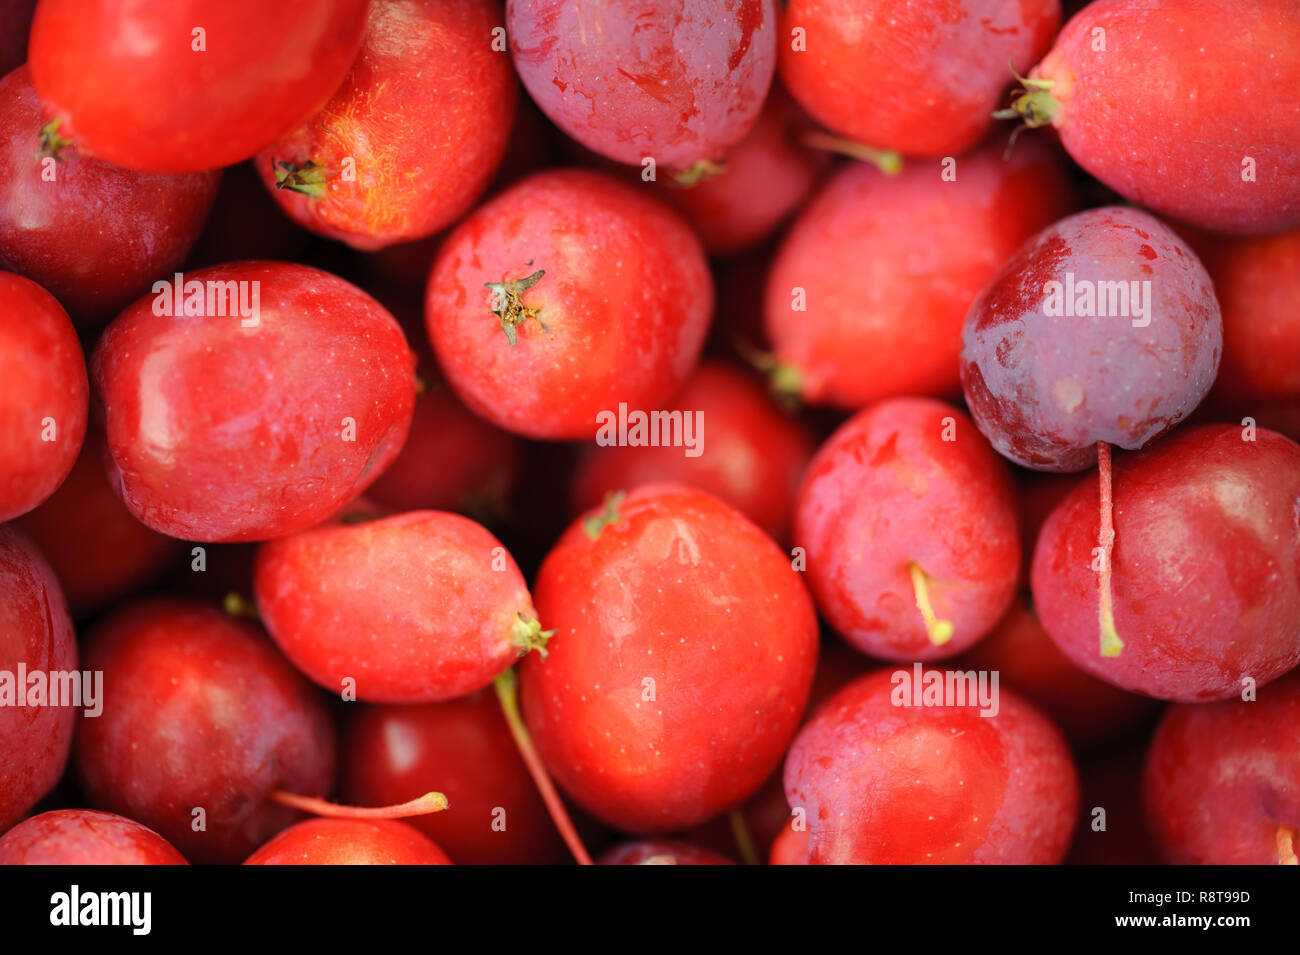 https://c8.alamy.com/comp/R8T99D/small-cherry-red-wild-apple-R8T99D.jpg